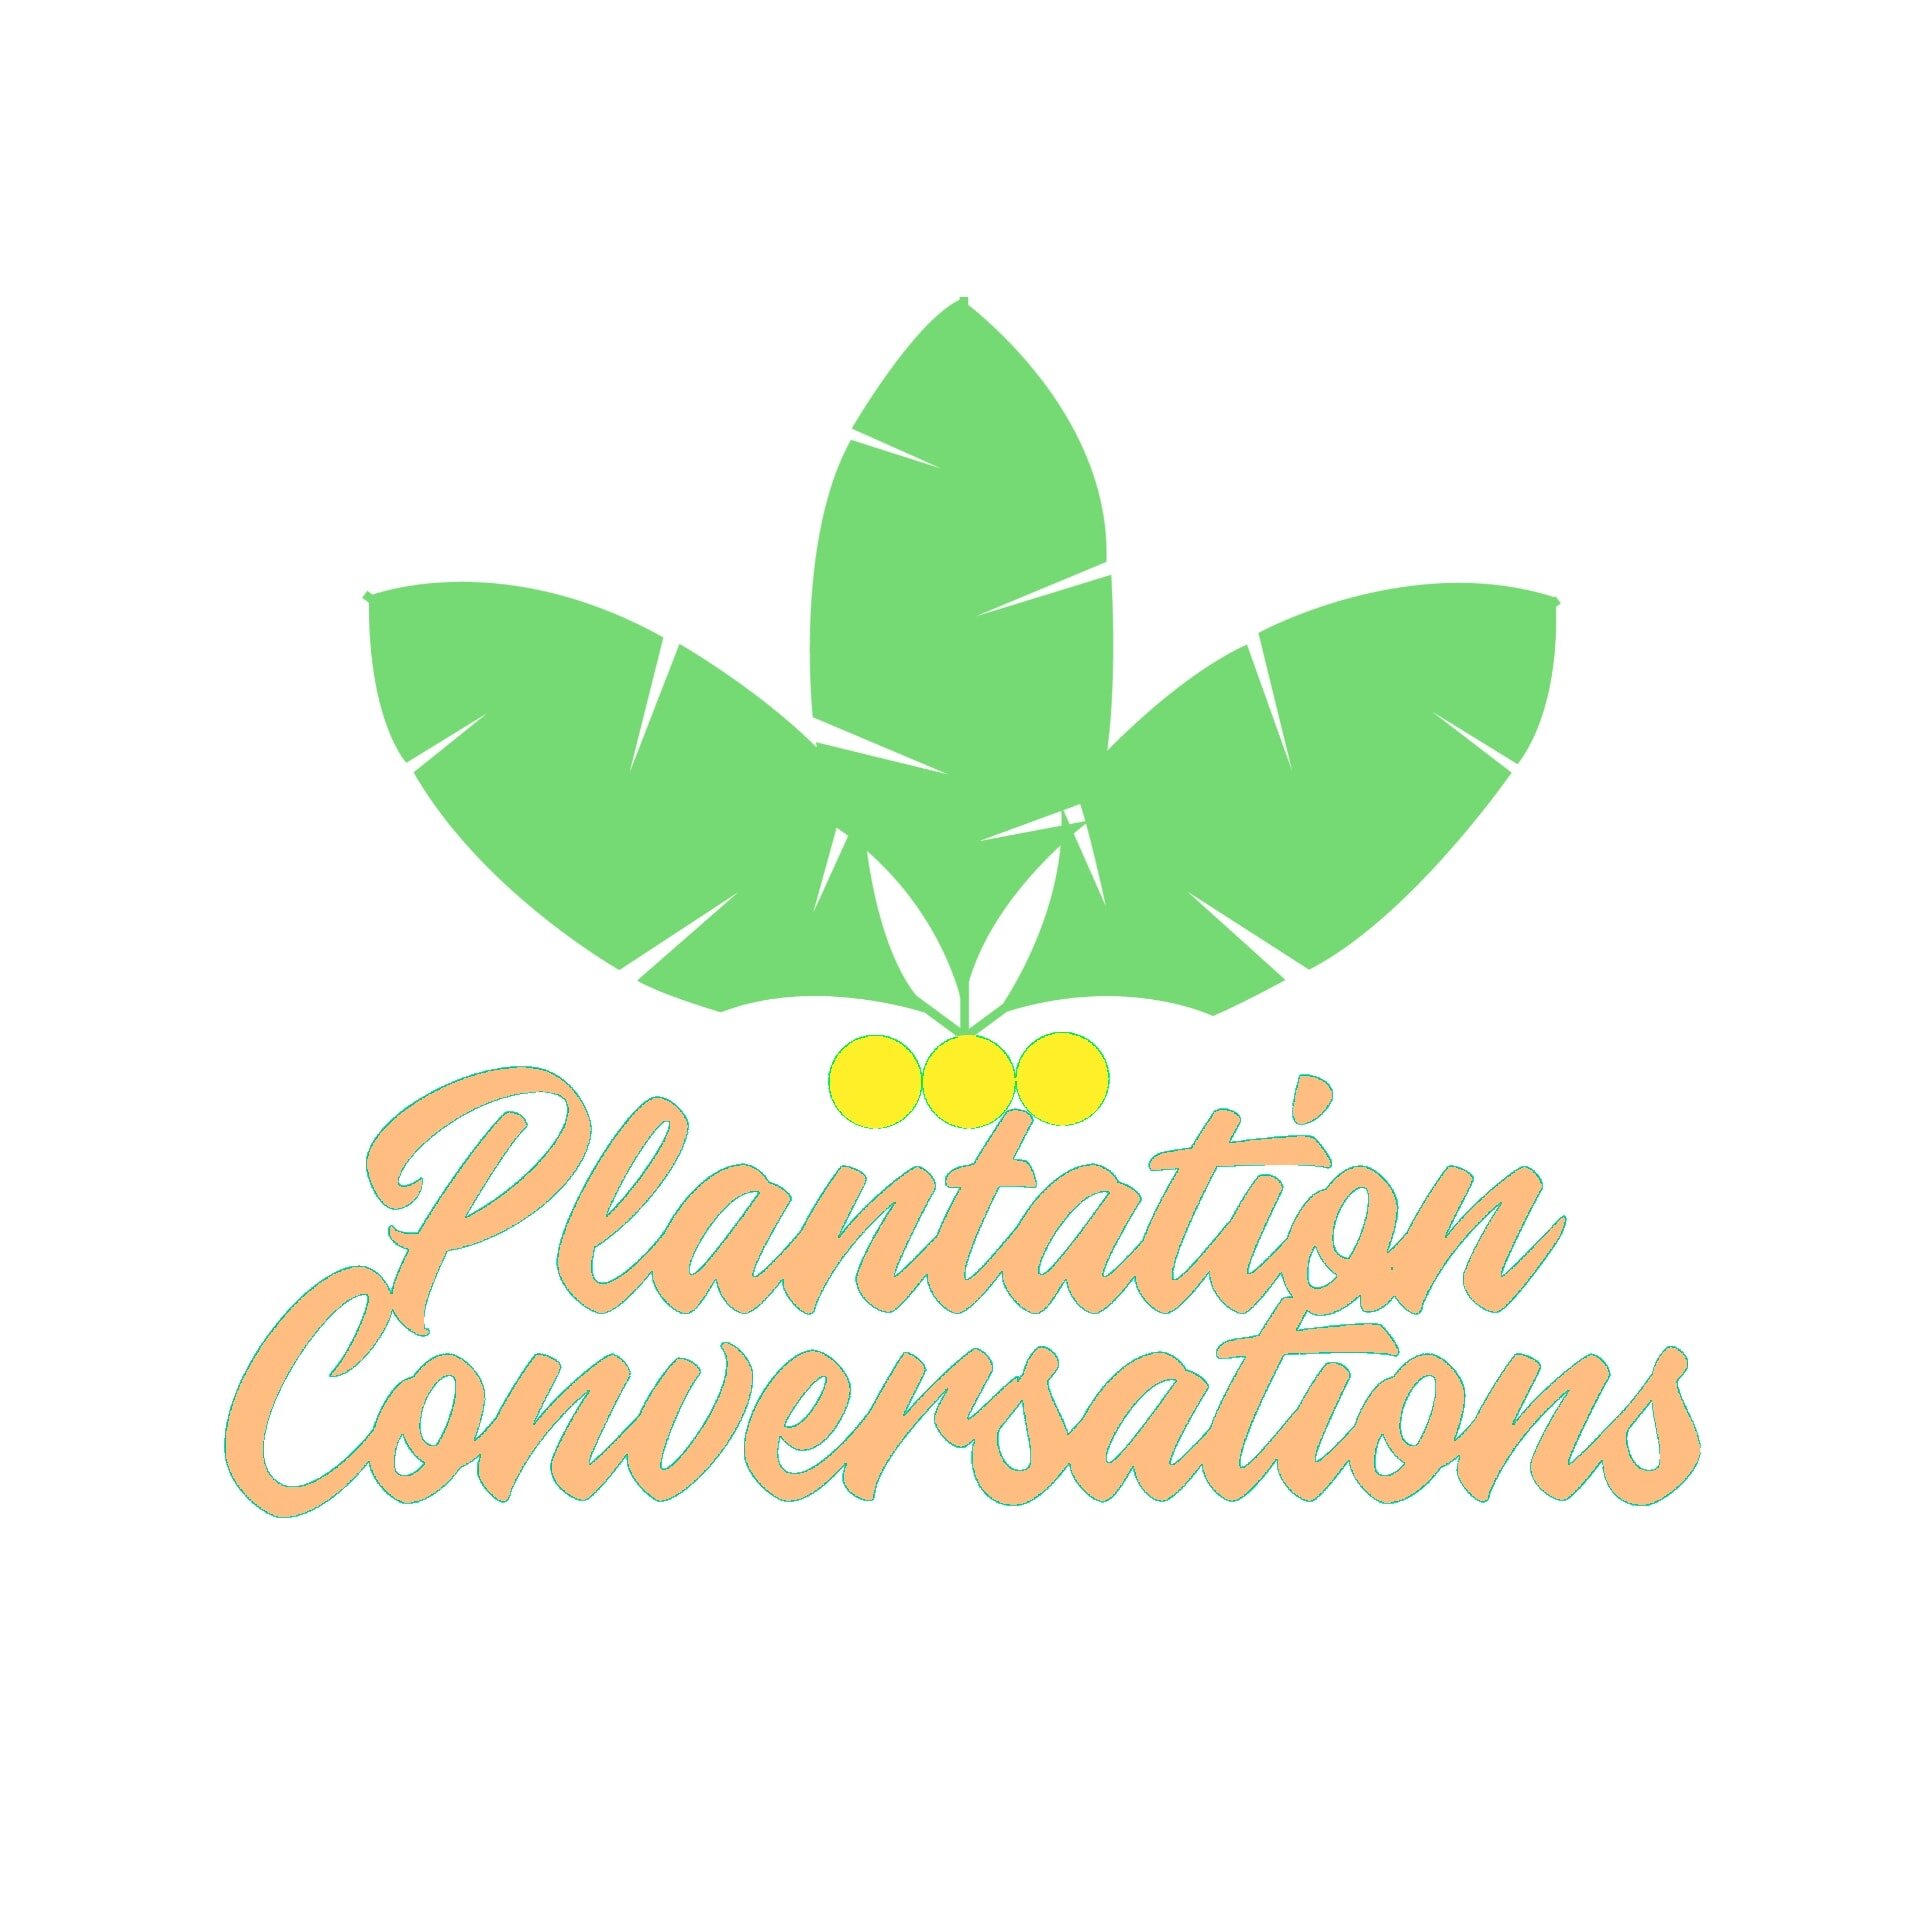 Plantation Conversations